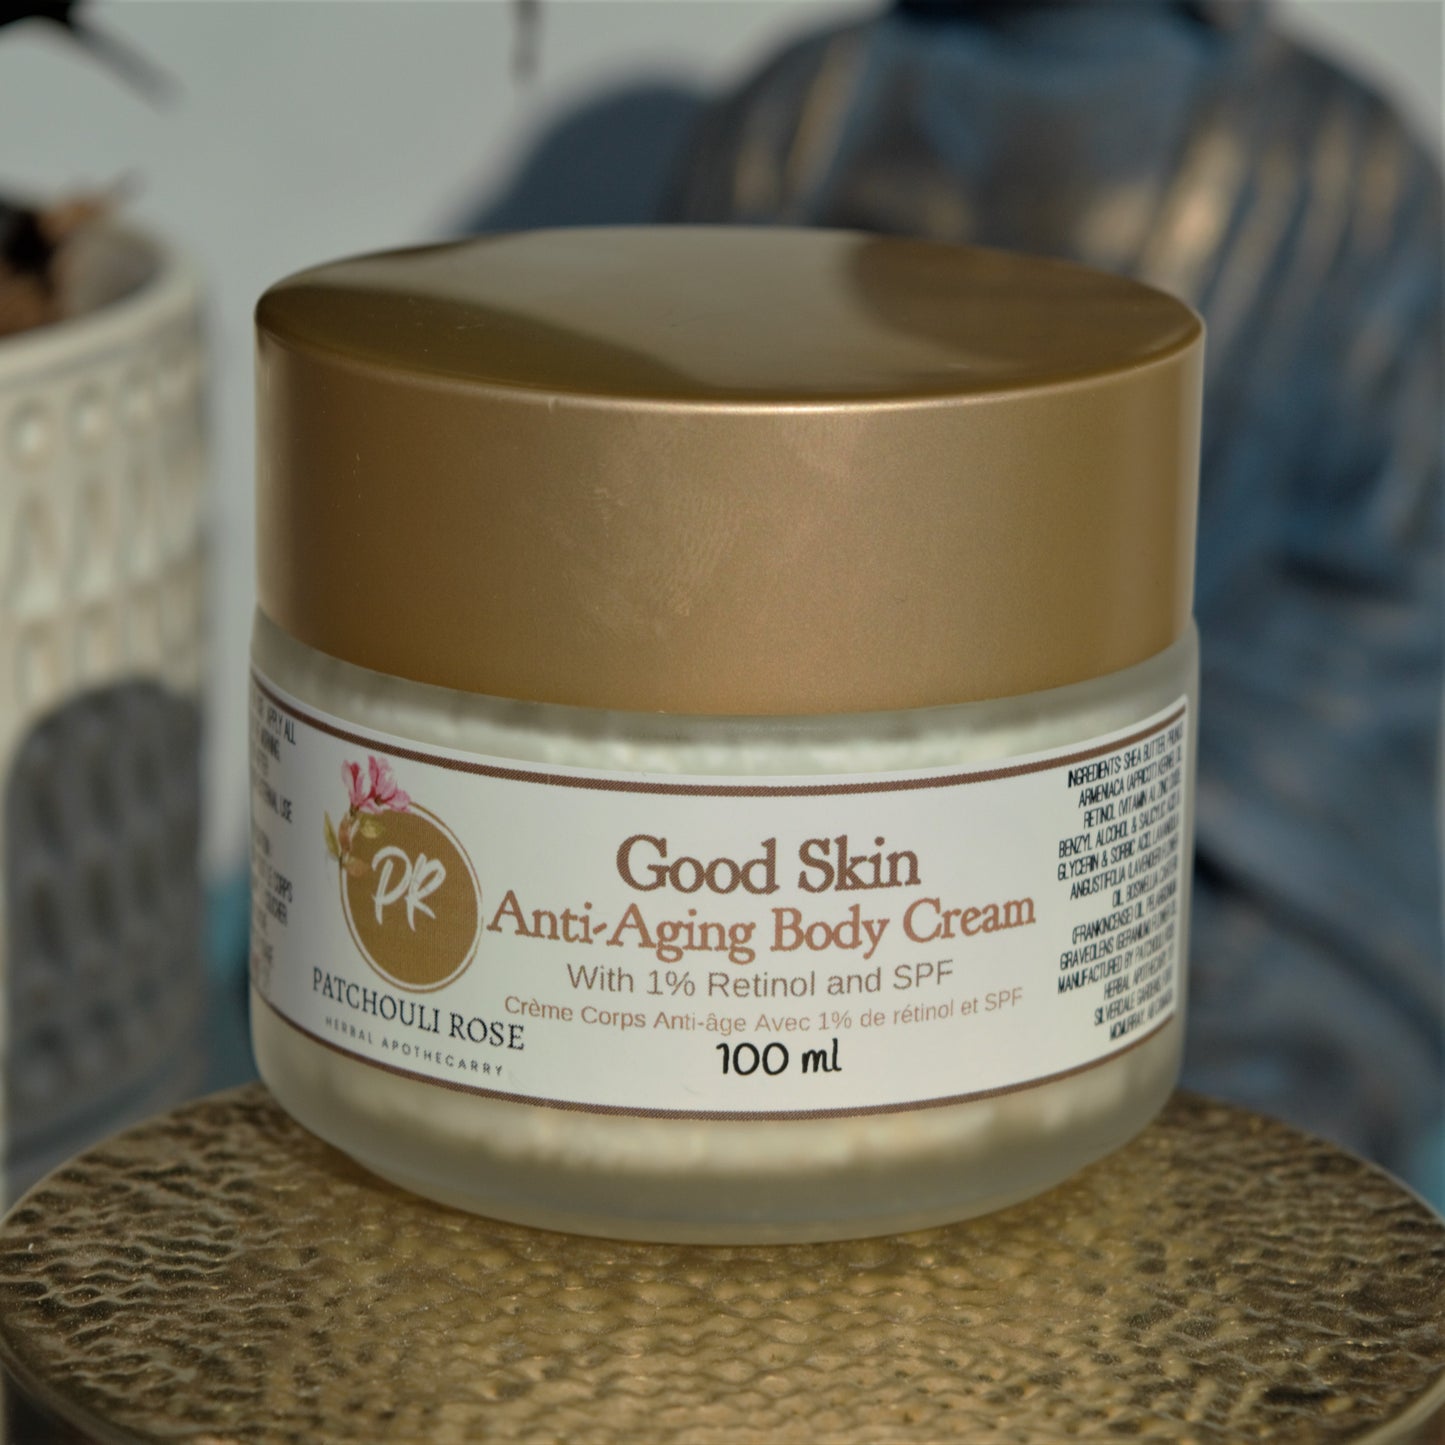 Good Skin Body Cream with 1% Retinol and SPF